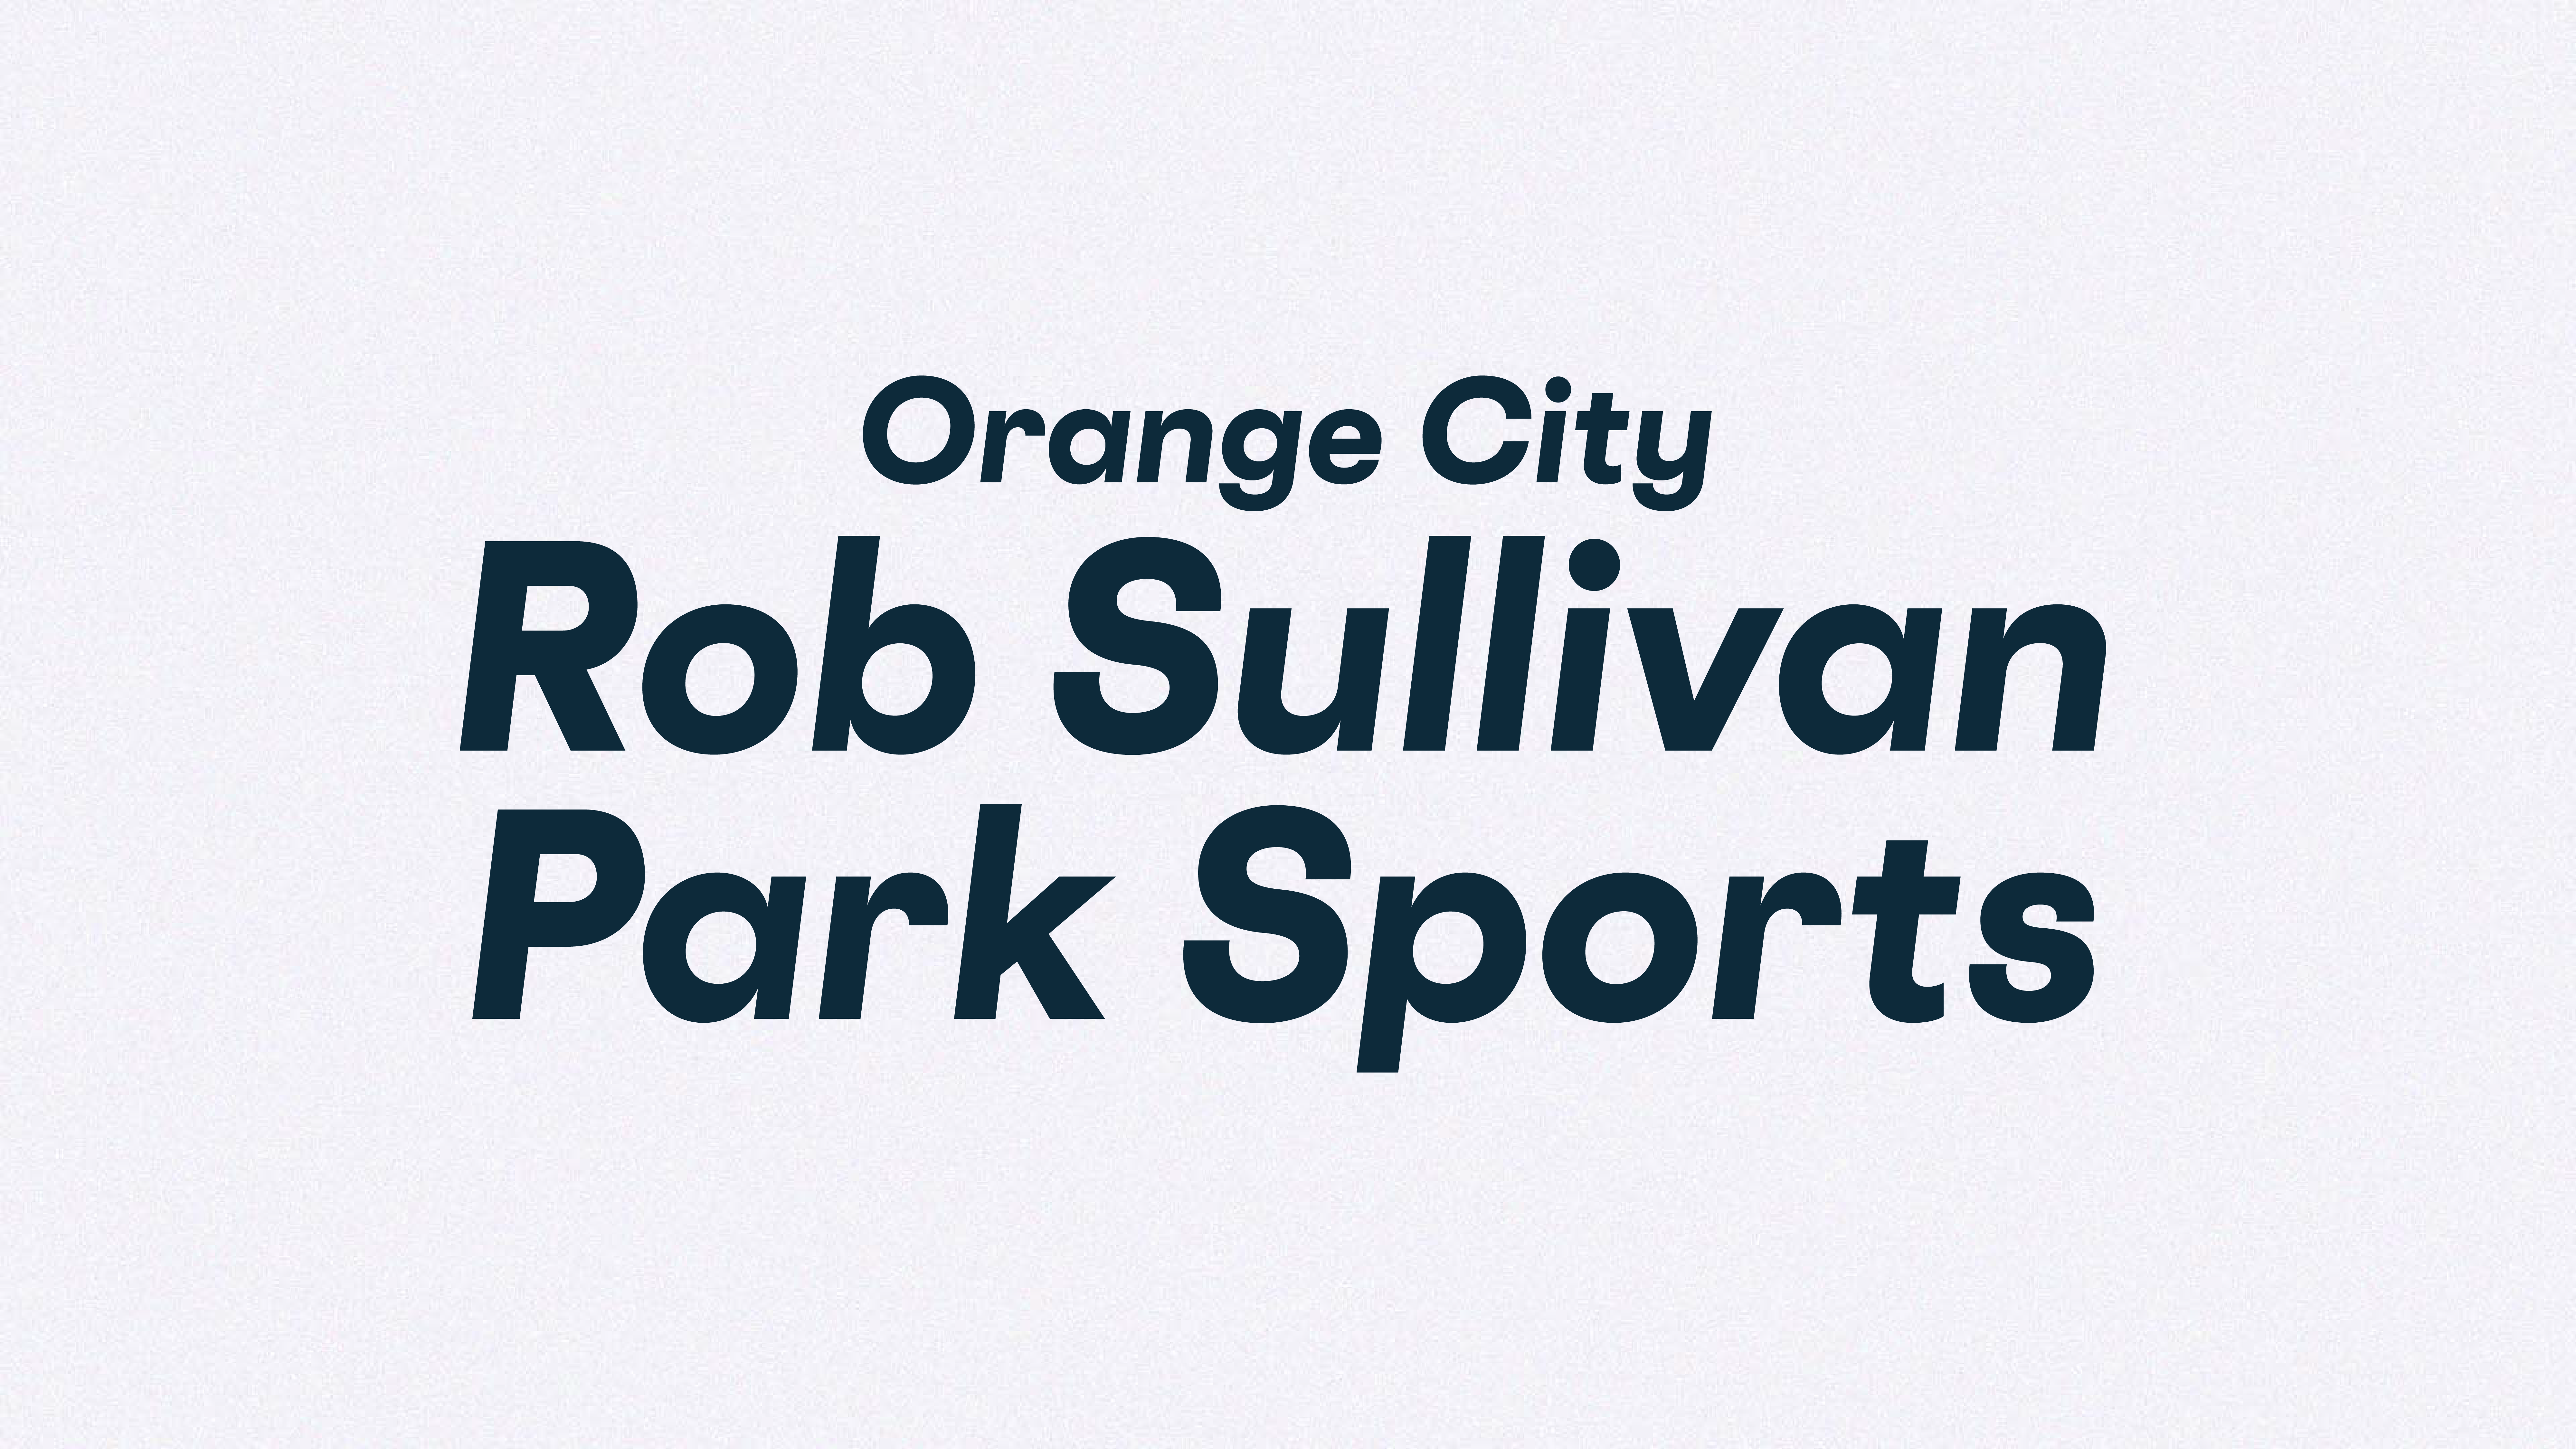 Orange City Rob Sullivan Park Sports Outreach